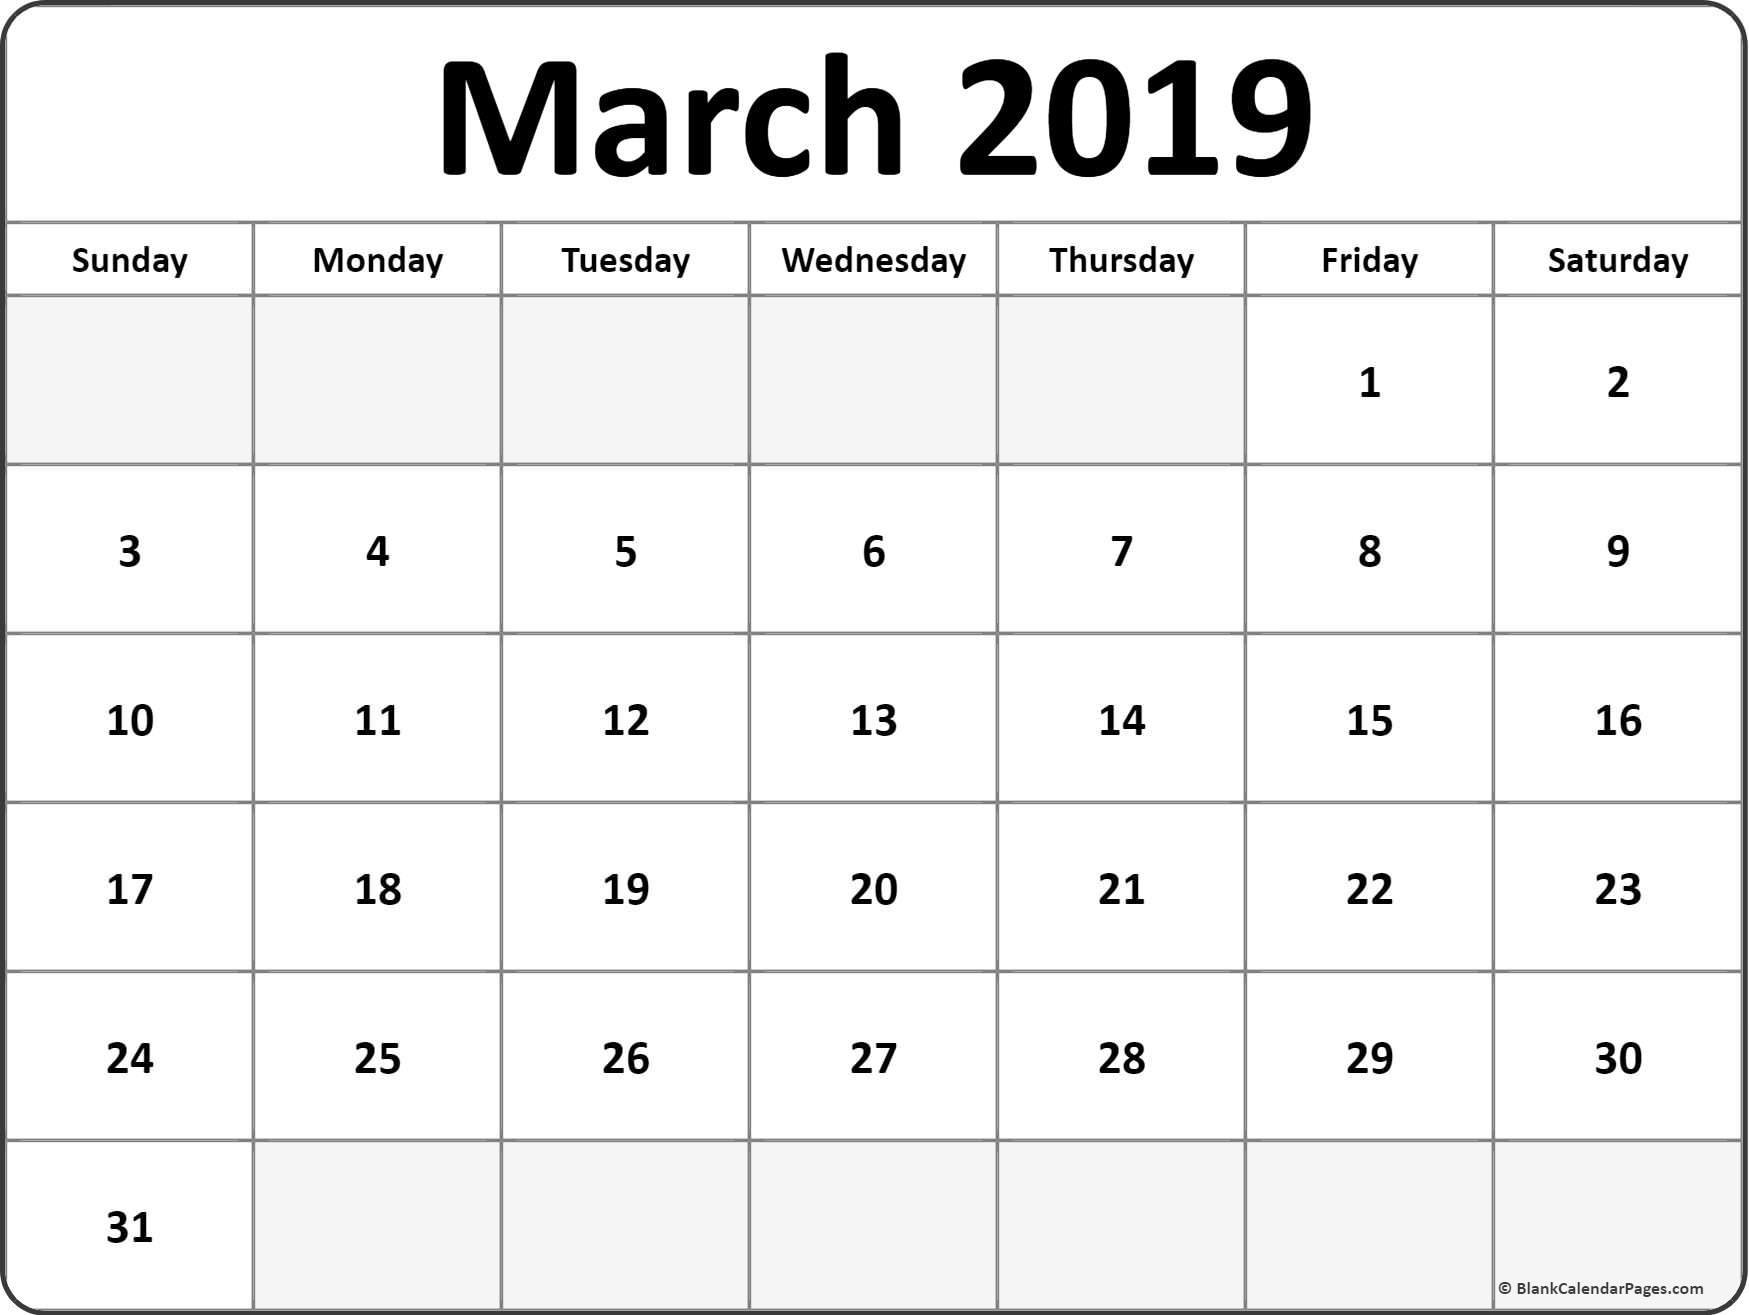 March 2019 Blank Calendar Templates